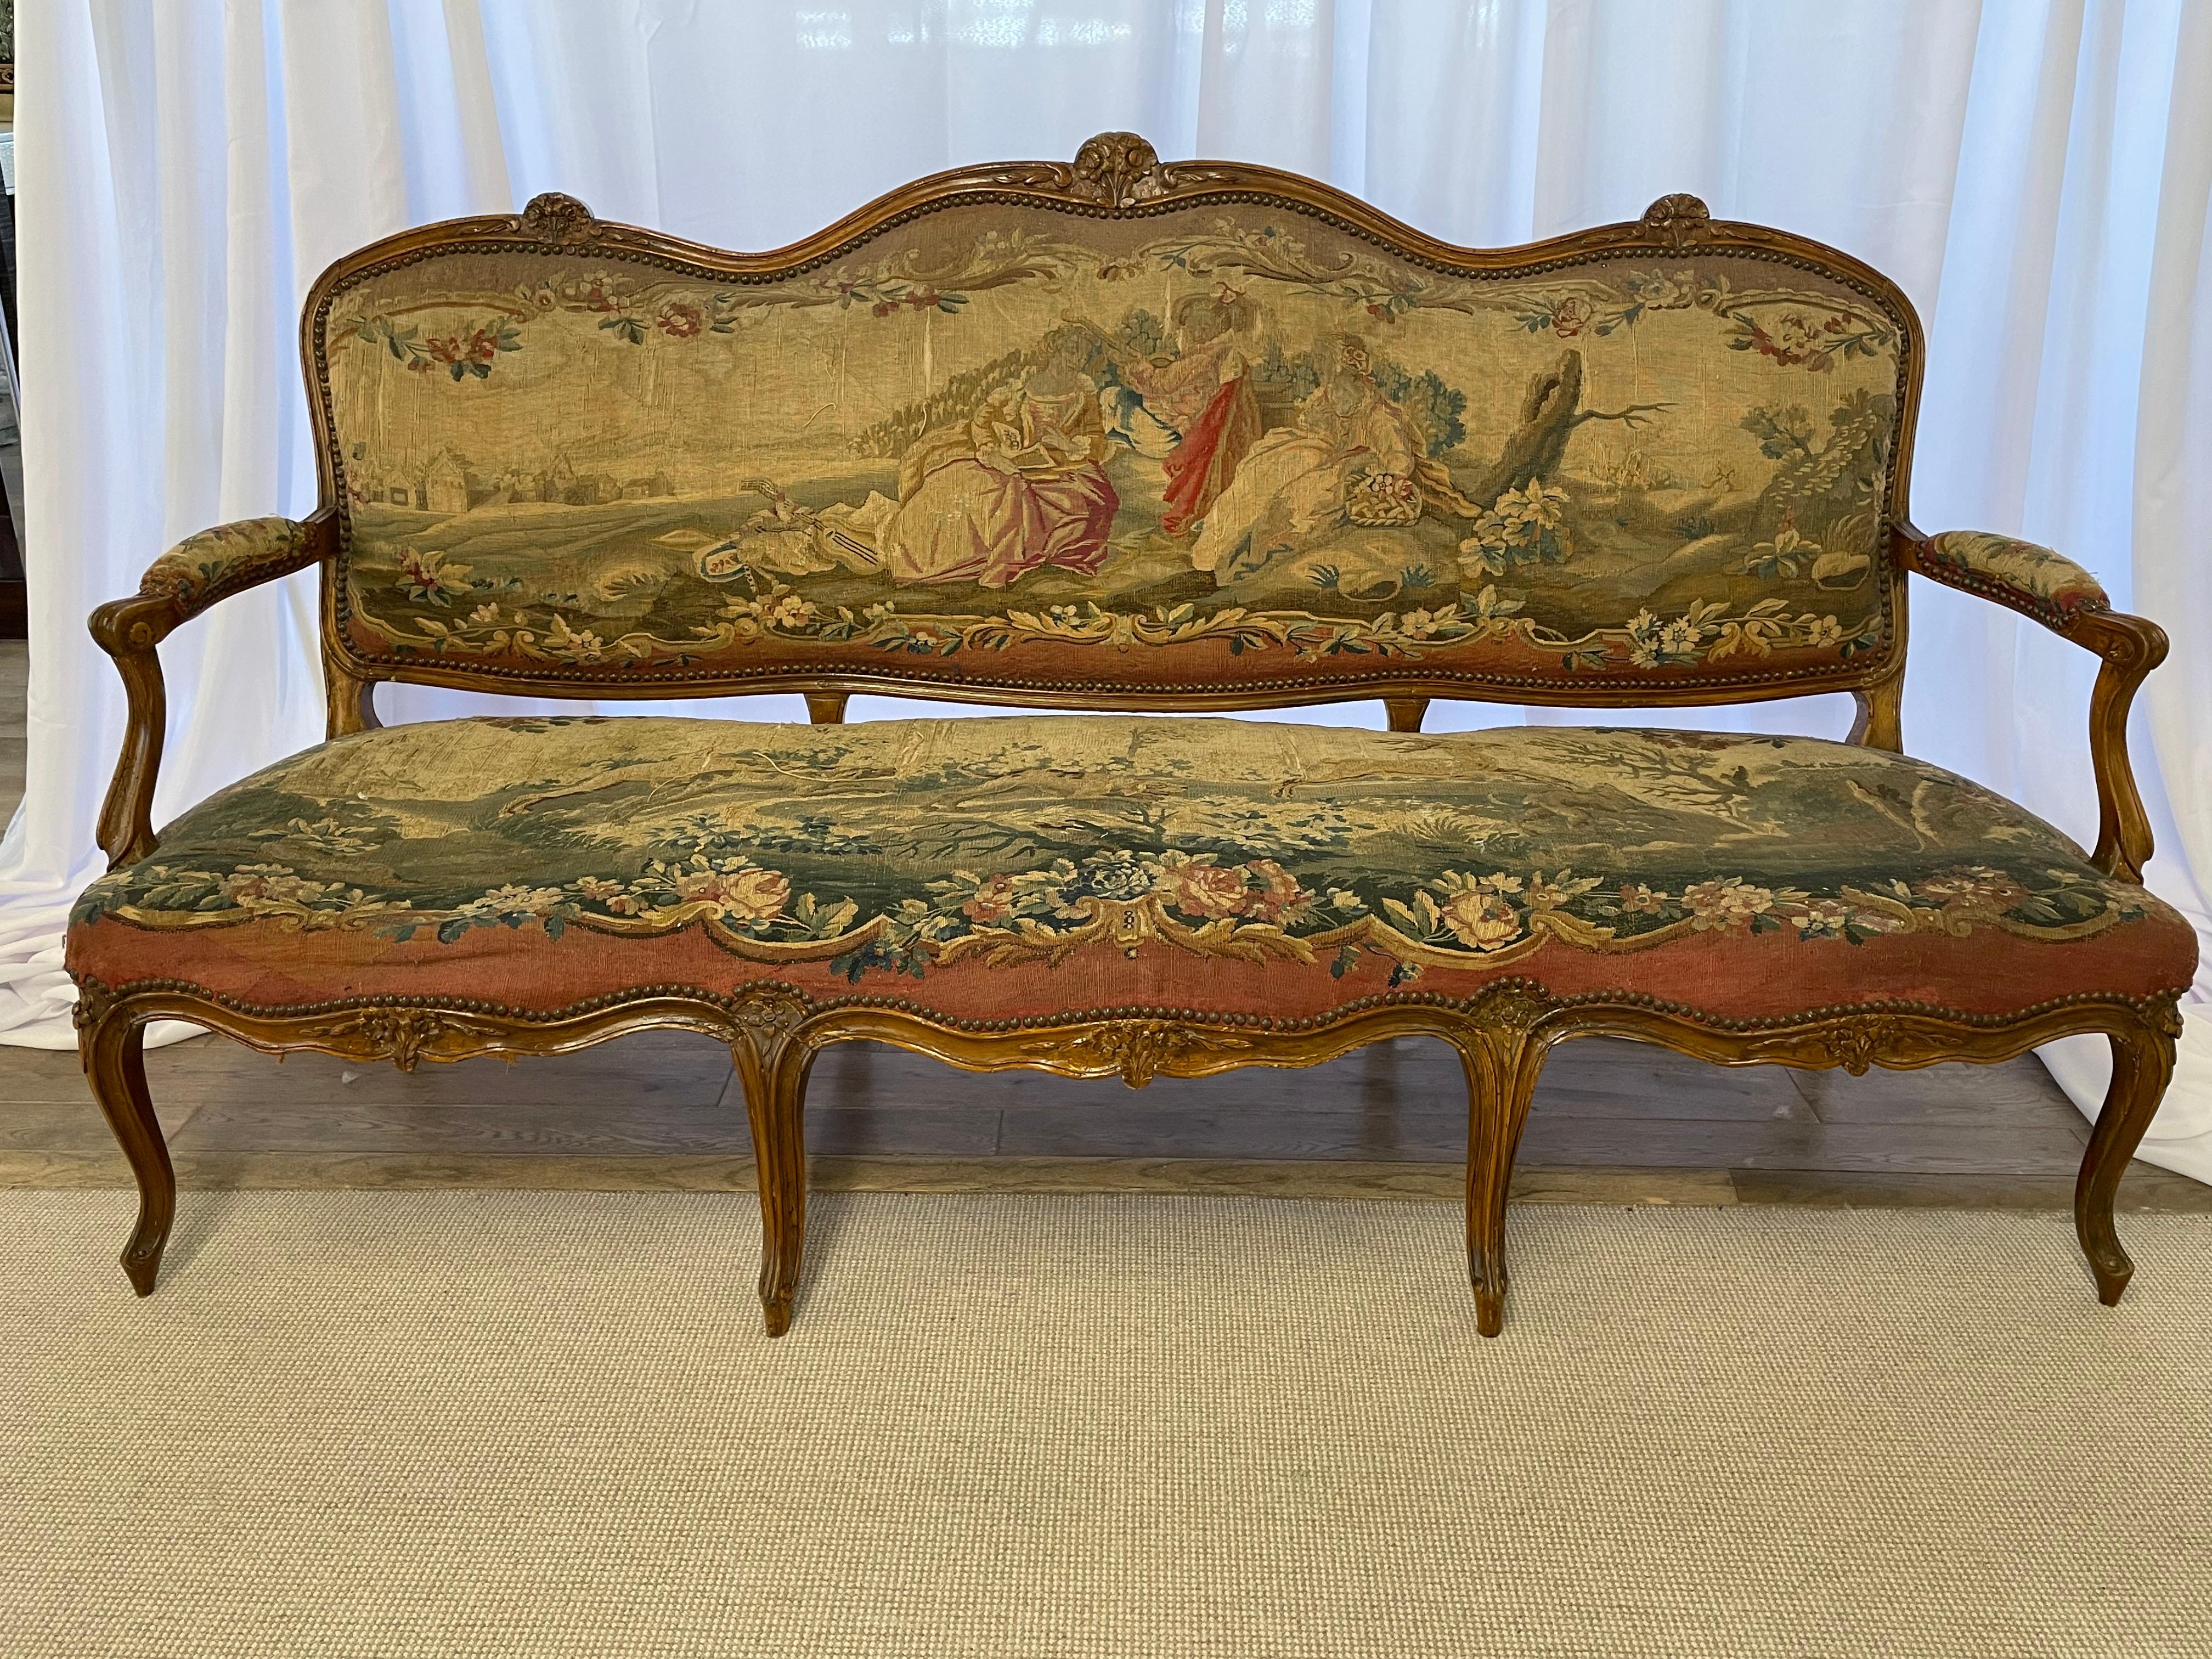 18th century upholstery